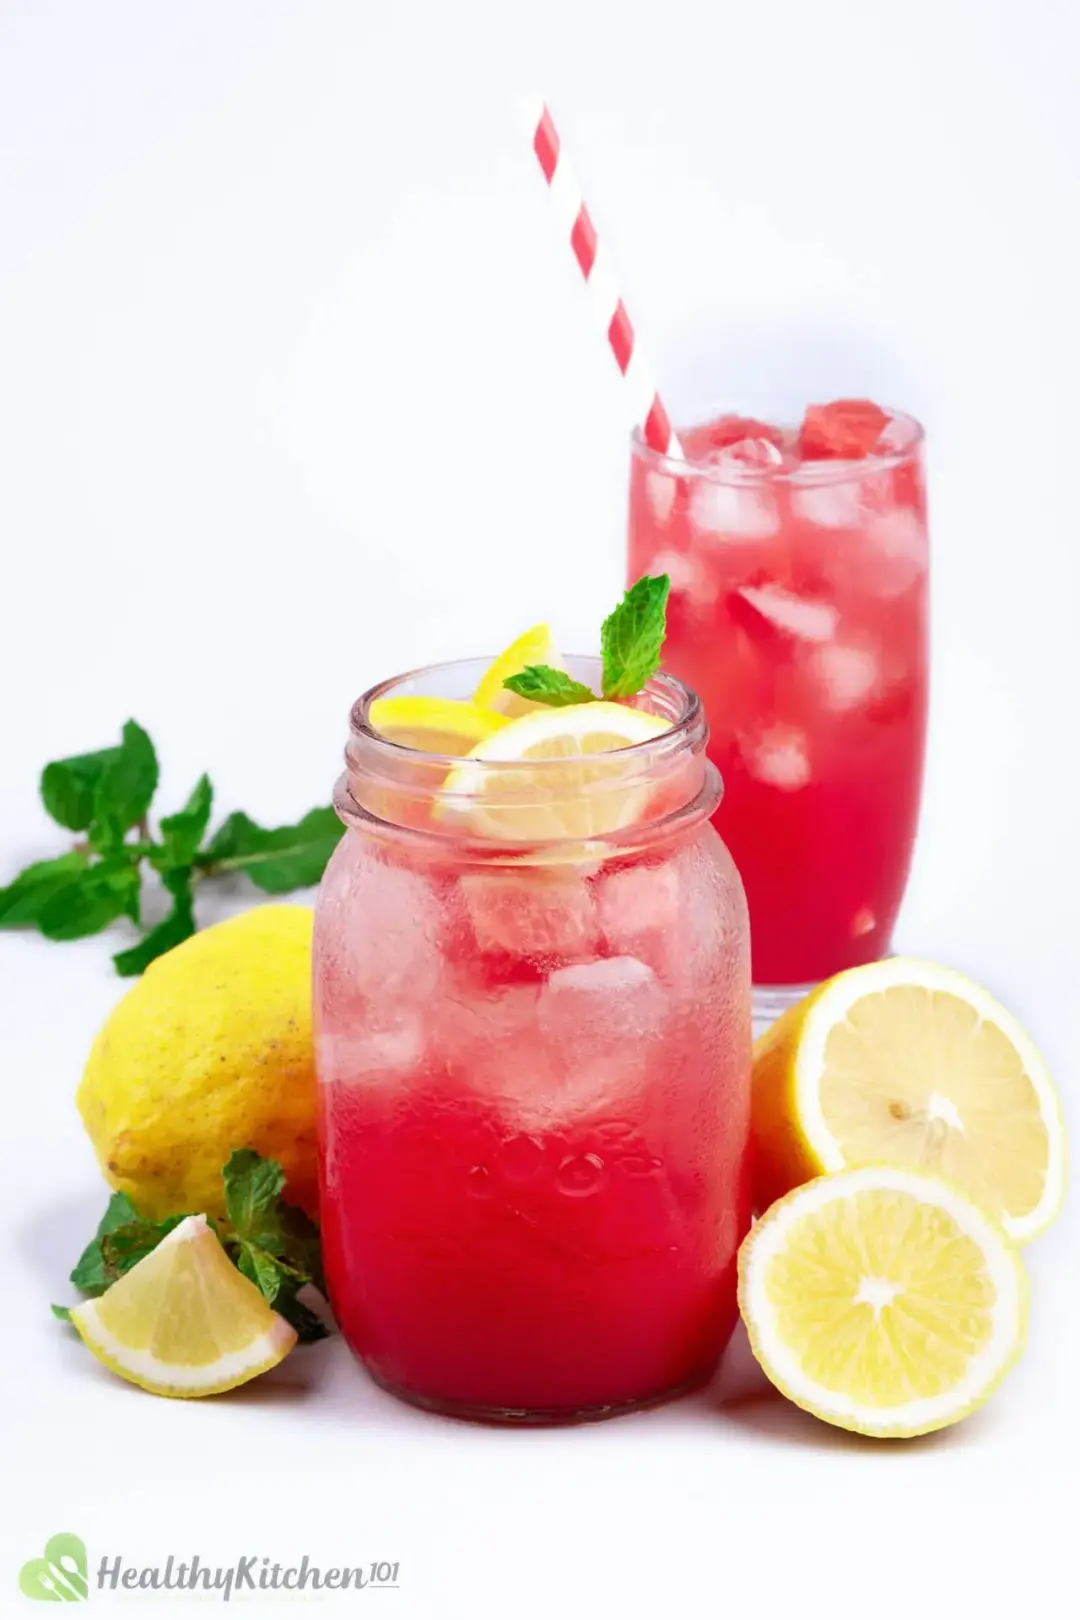 Watermelon Juice and Lemon recipe